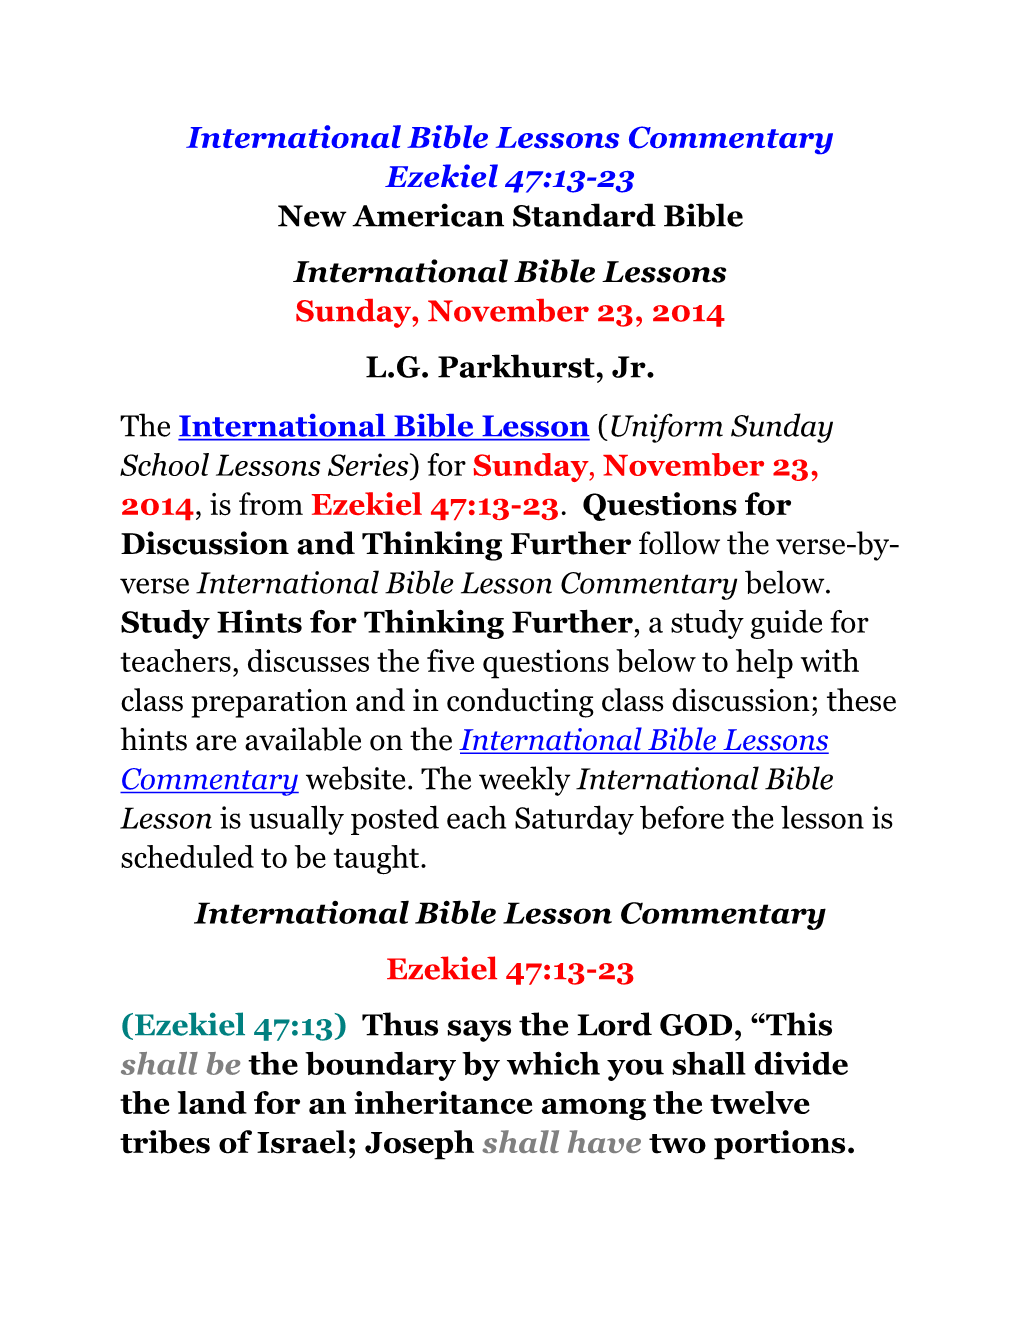 Ezekiel 47:13-23 NASB Large Print Commentary